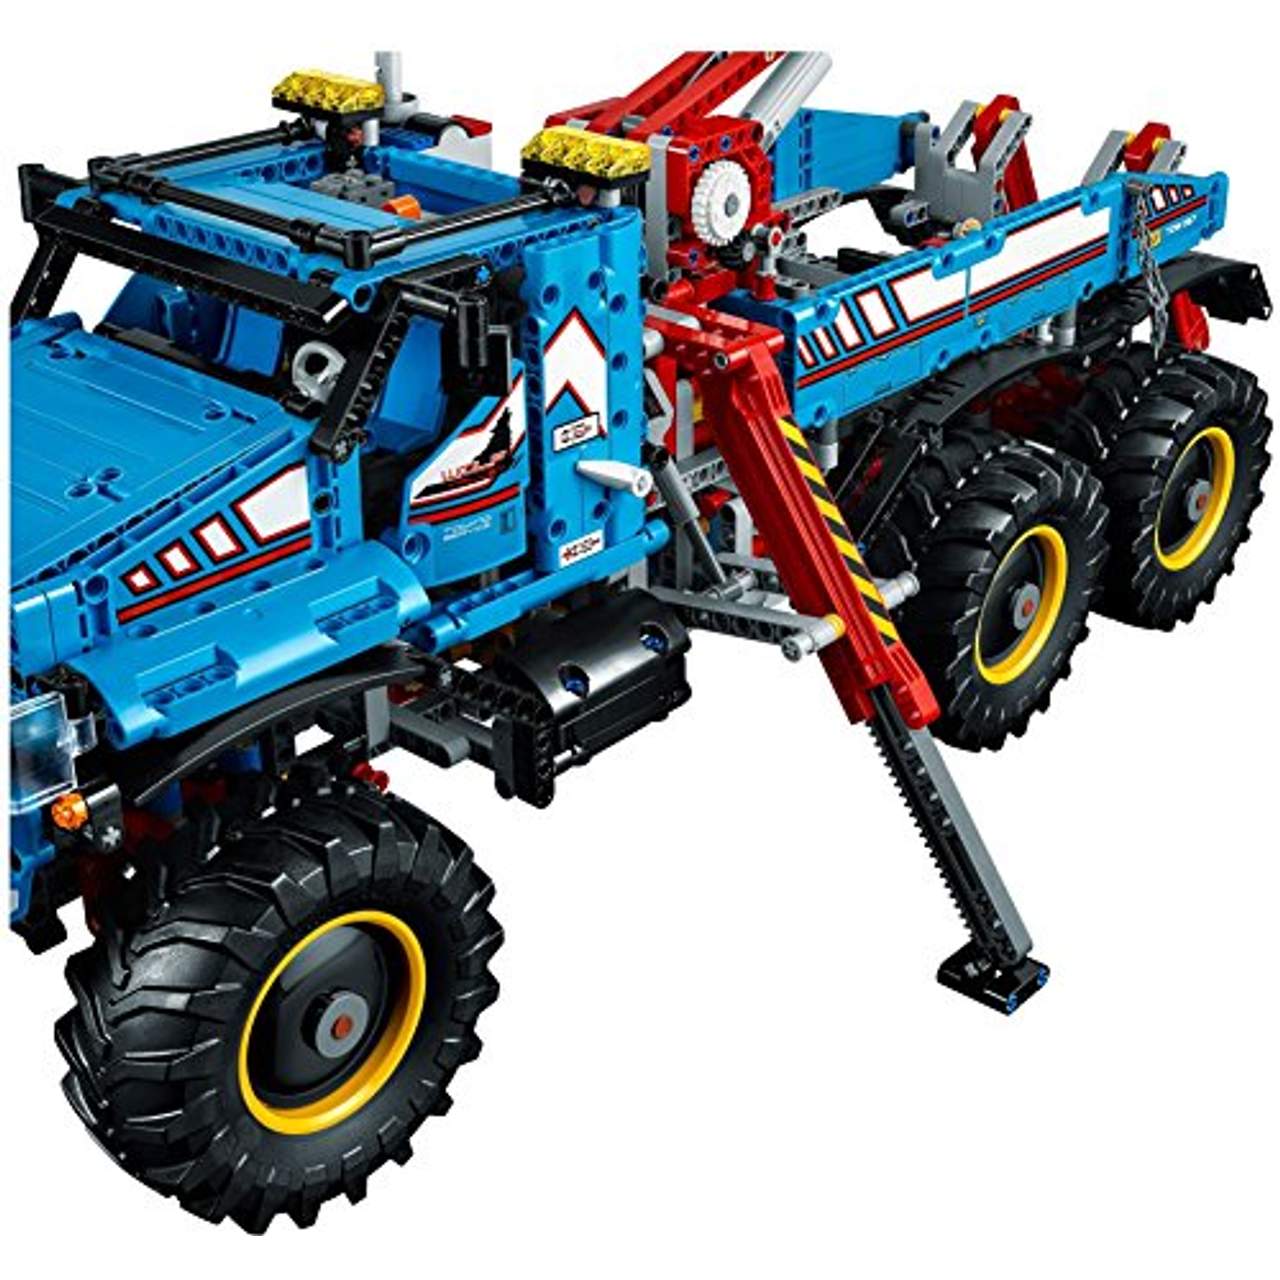 LEGO Technic 42070 Allrad Abschleppwagen